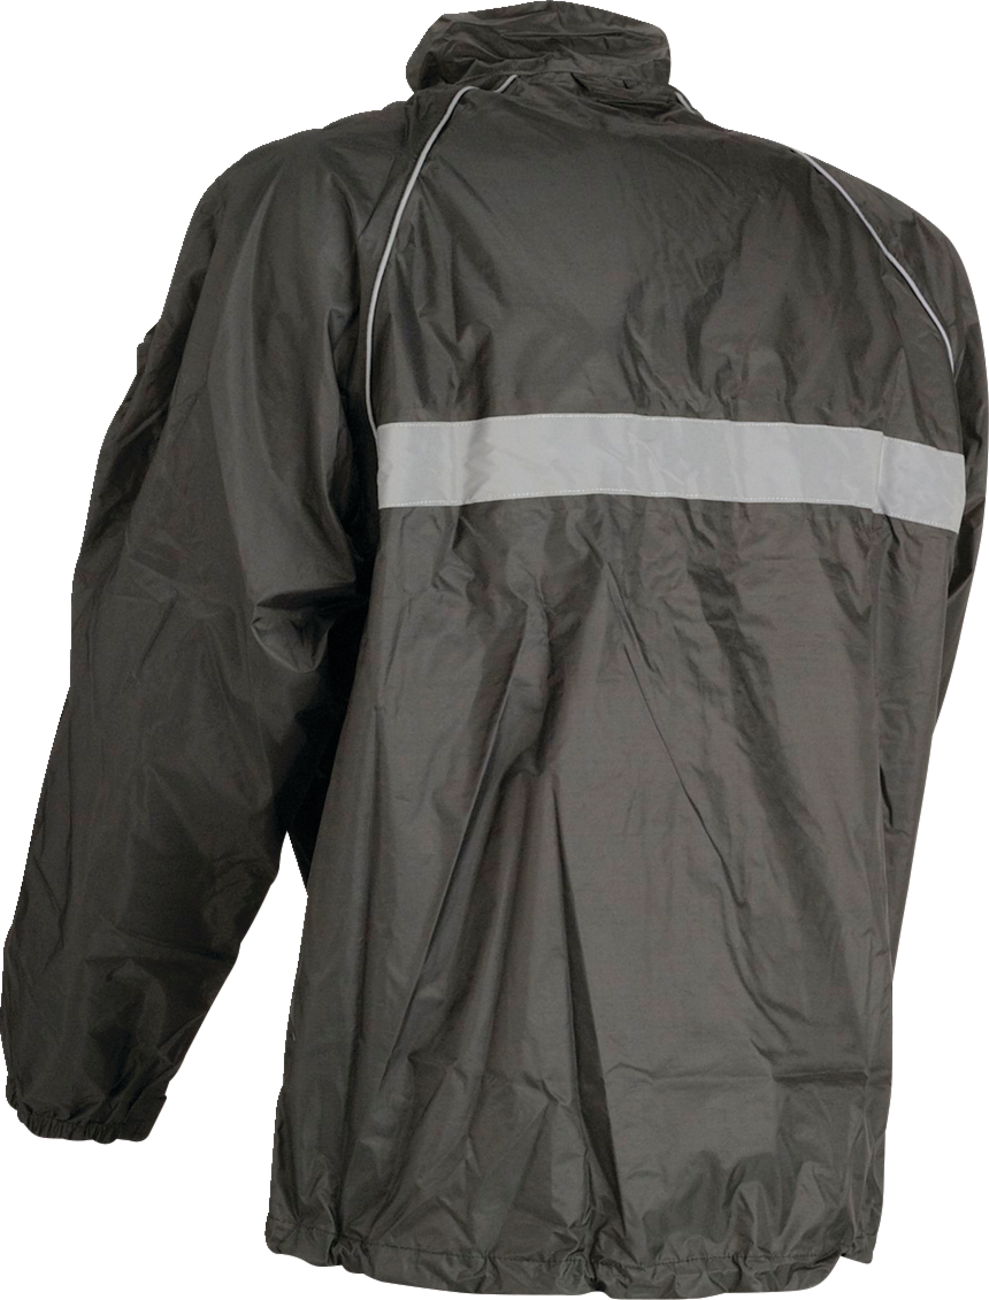 Z1R Waterproof Jacket - Black - Large 2854-0334